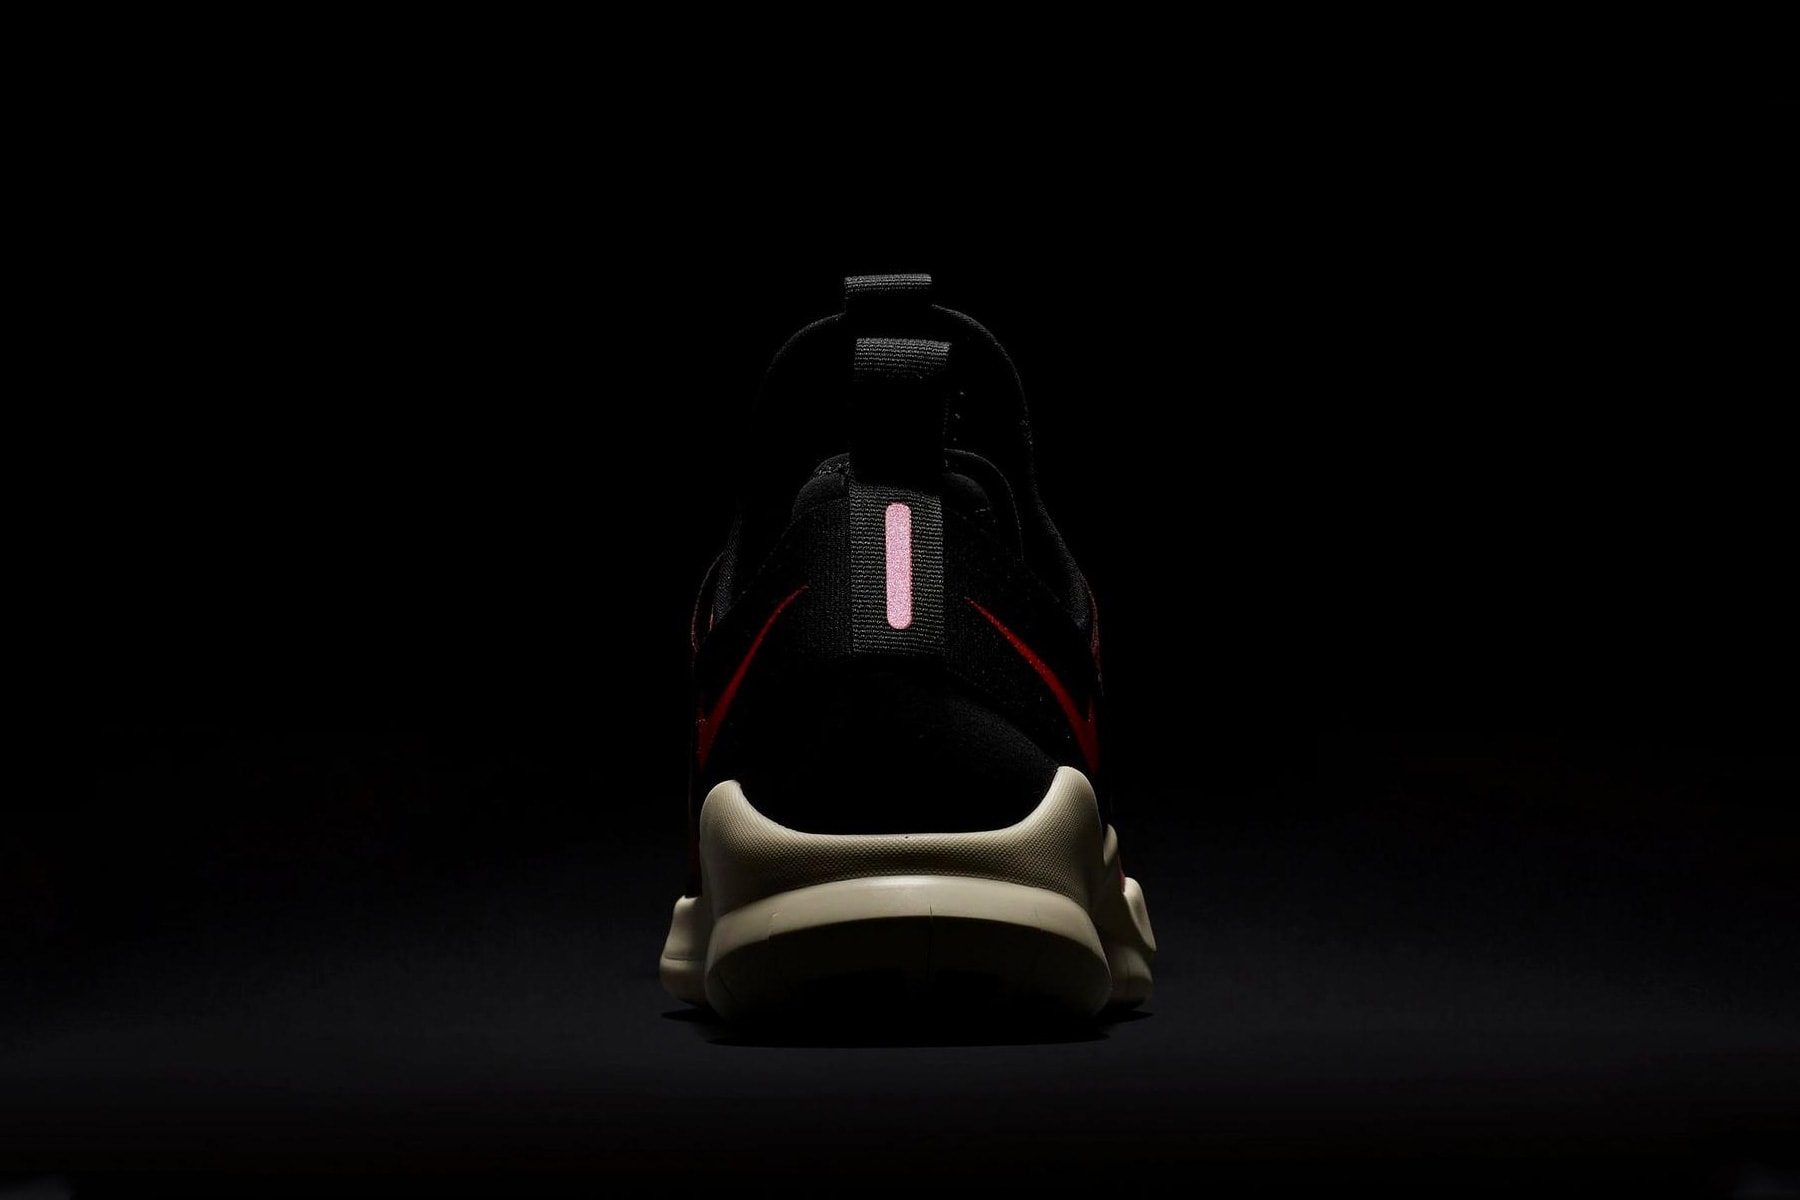 Nike Air Max Plus 3 Black/University Red/White Men's Shoe - Hibbett